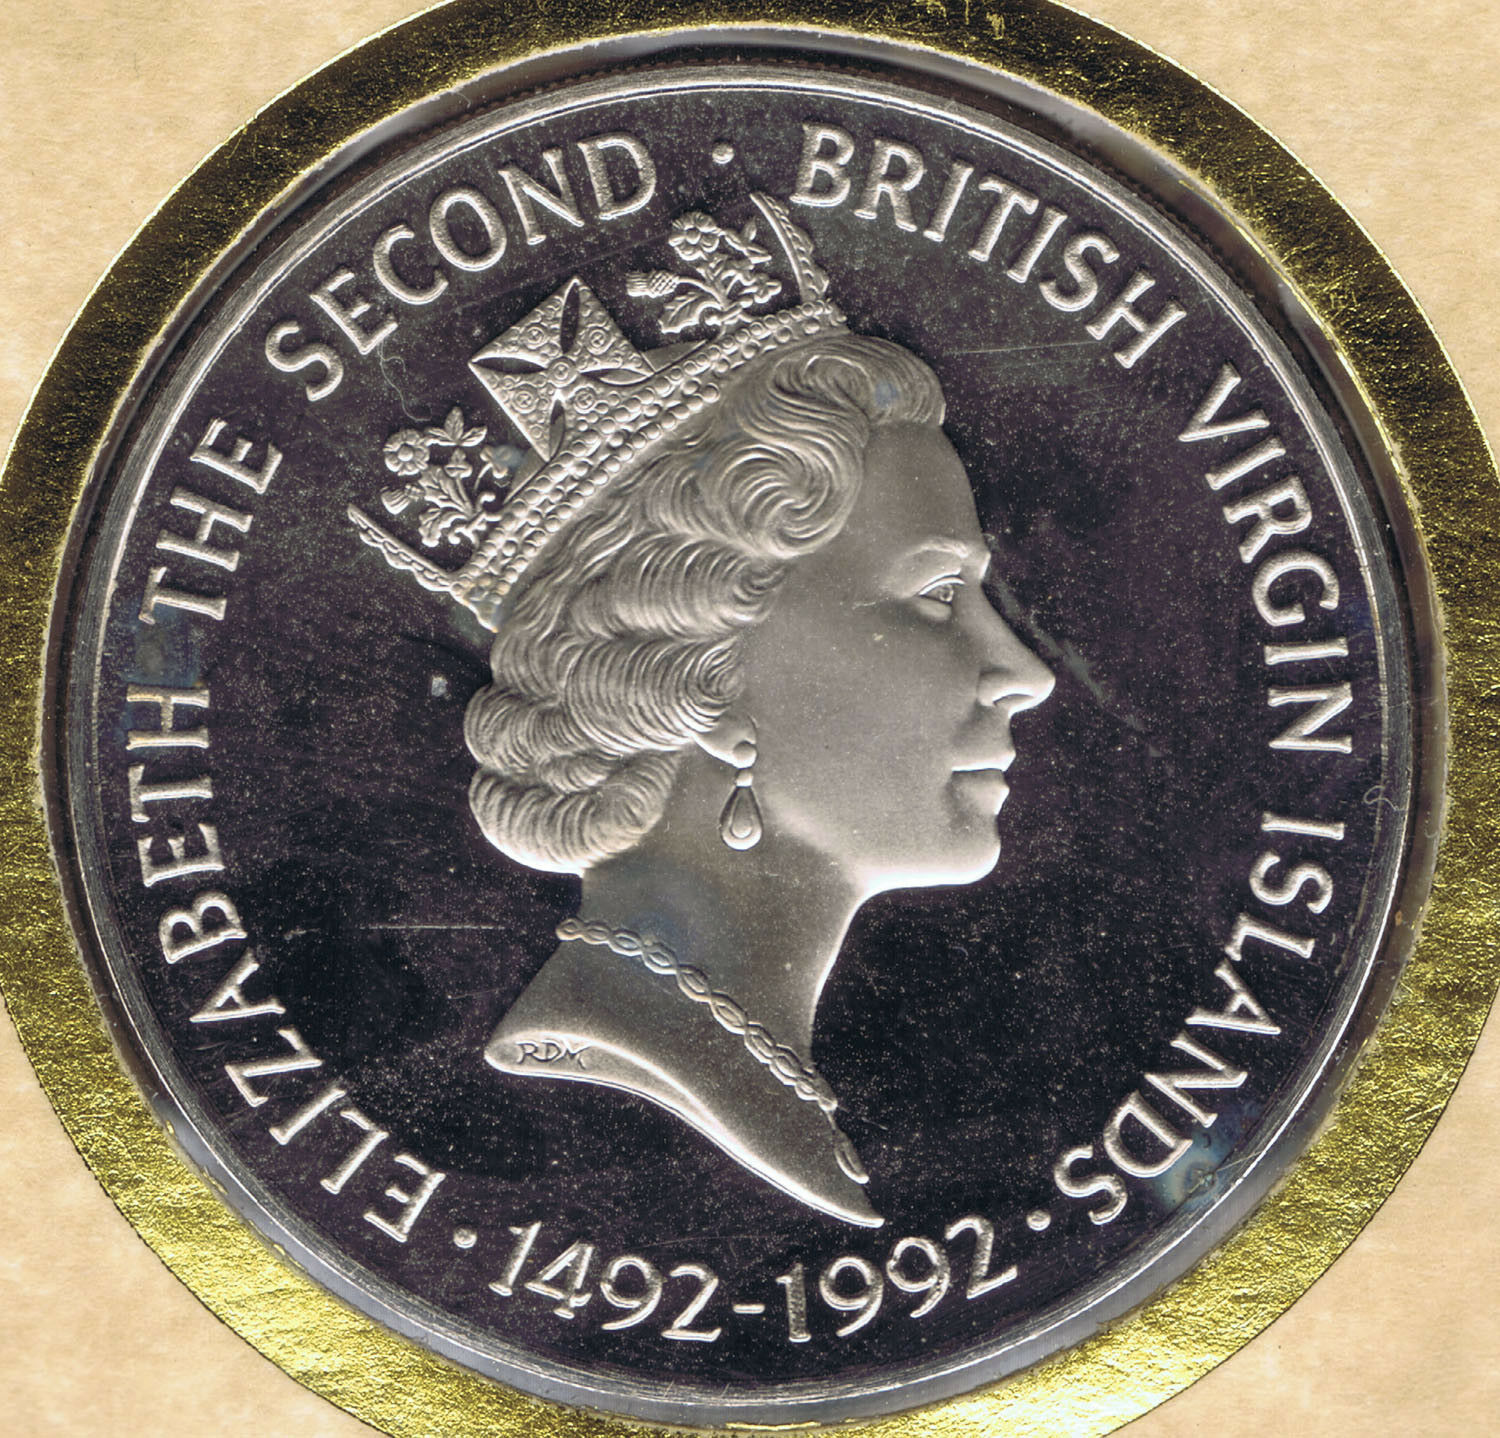 BRITISH VIRGIN ISLANDS COLUMBUS 1992 UNC COIN PACK with INFO & GOV'T CoA BVI